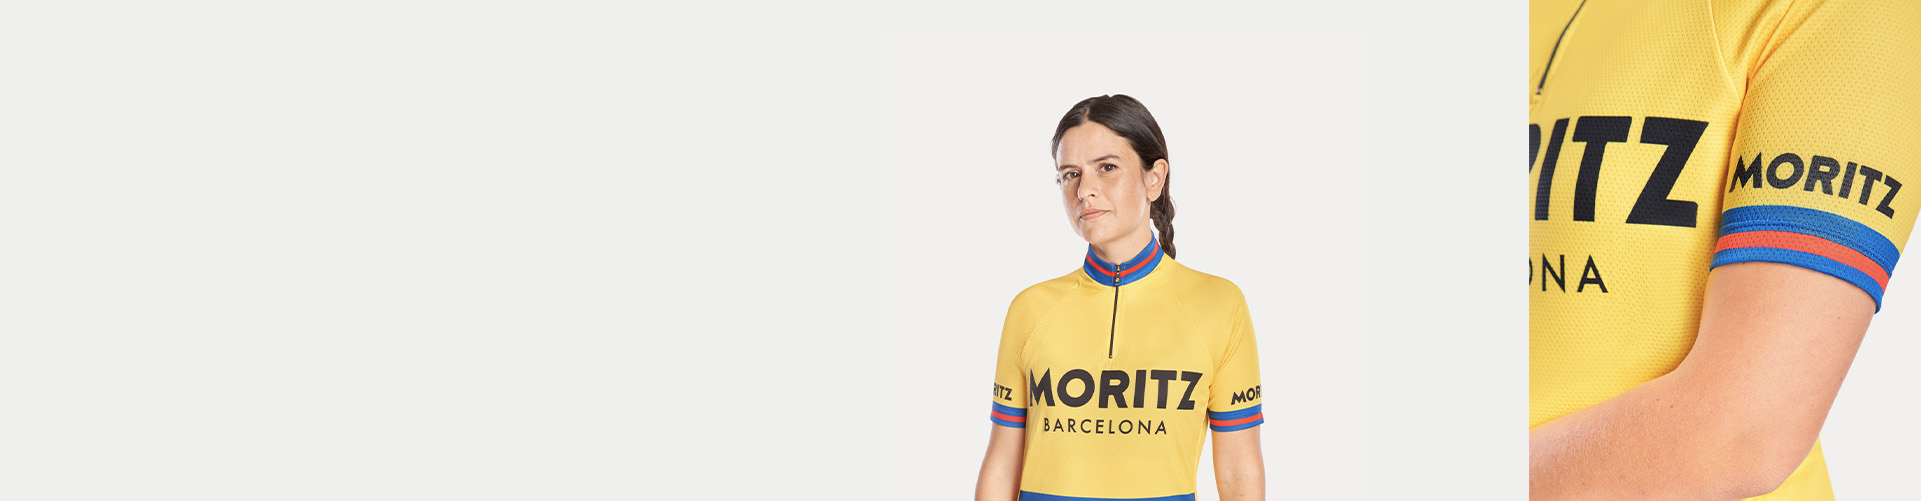 Original Moritz's cycling jersey